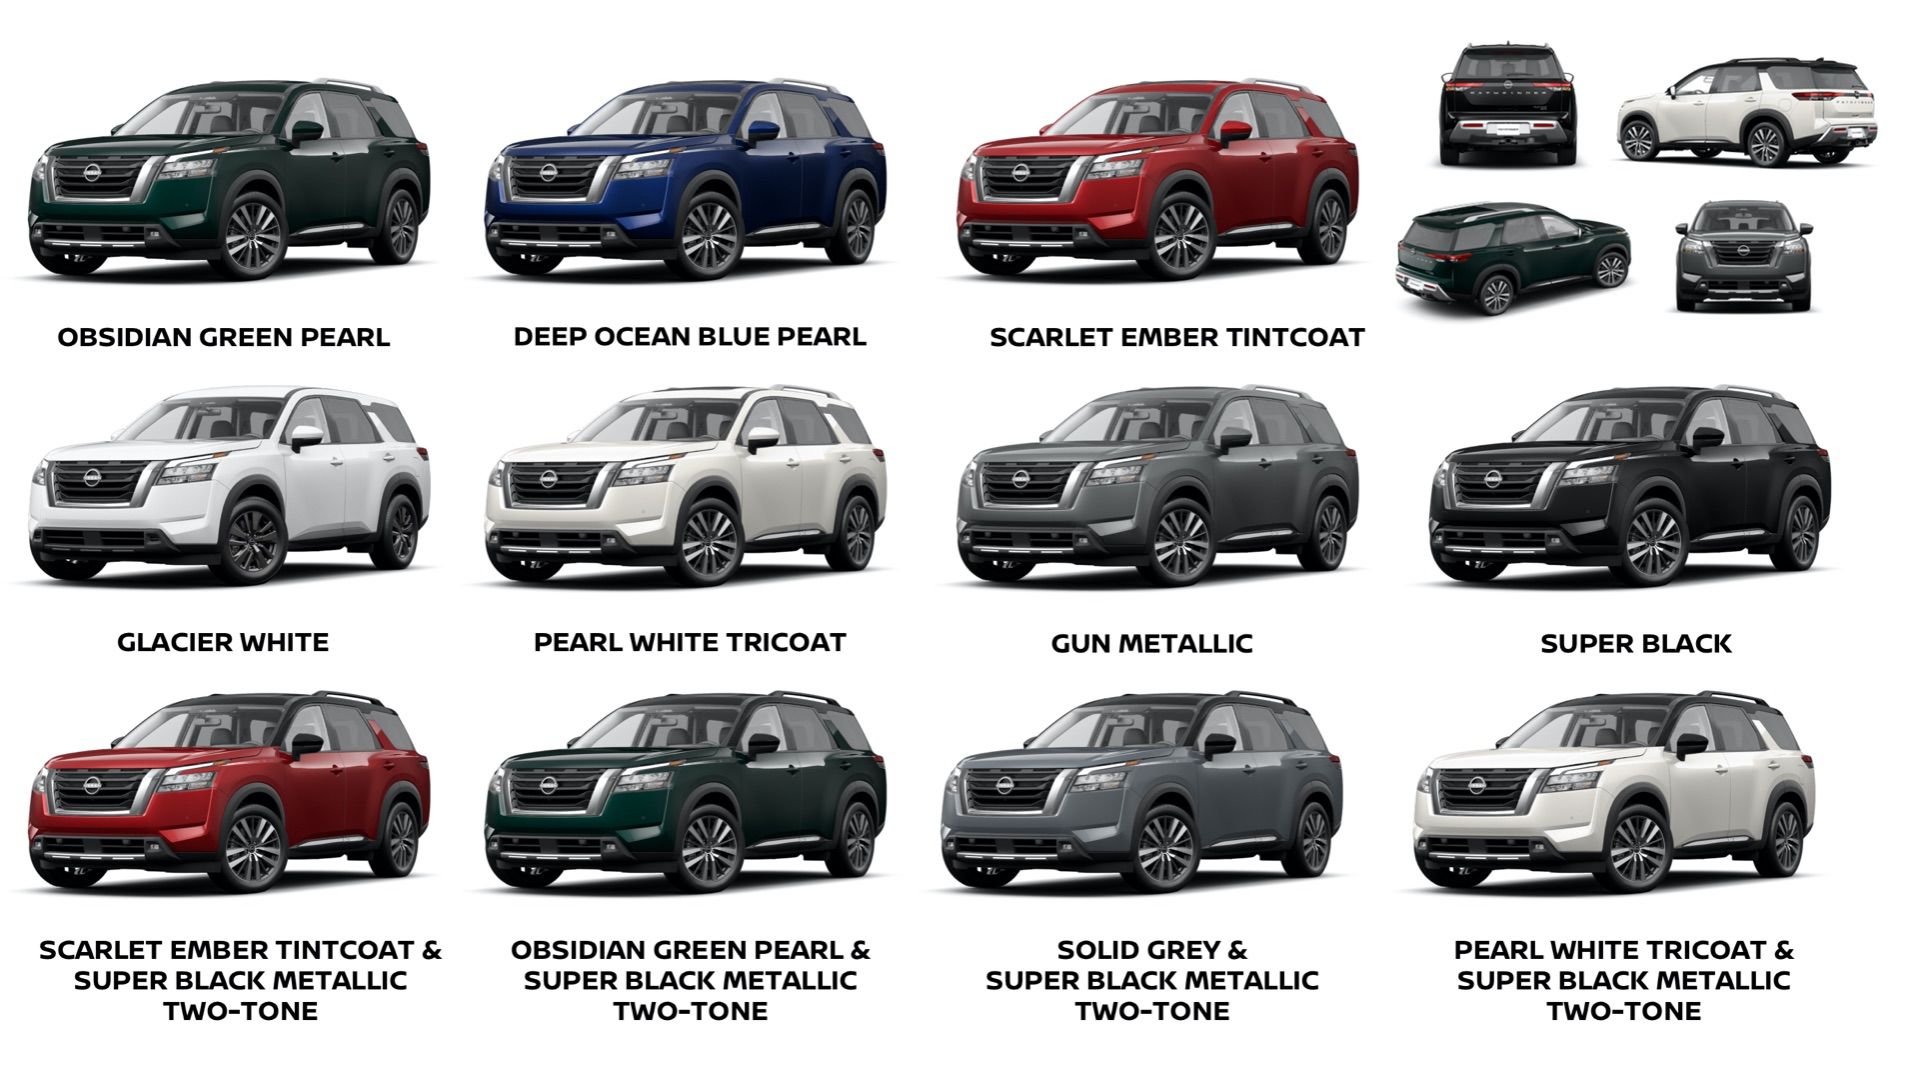 2022 Nissan Pathfinder – Every Colour Option